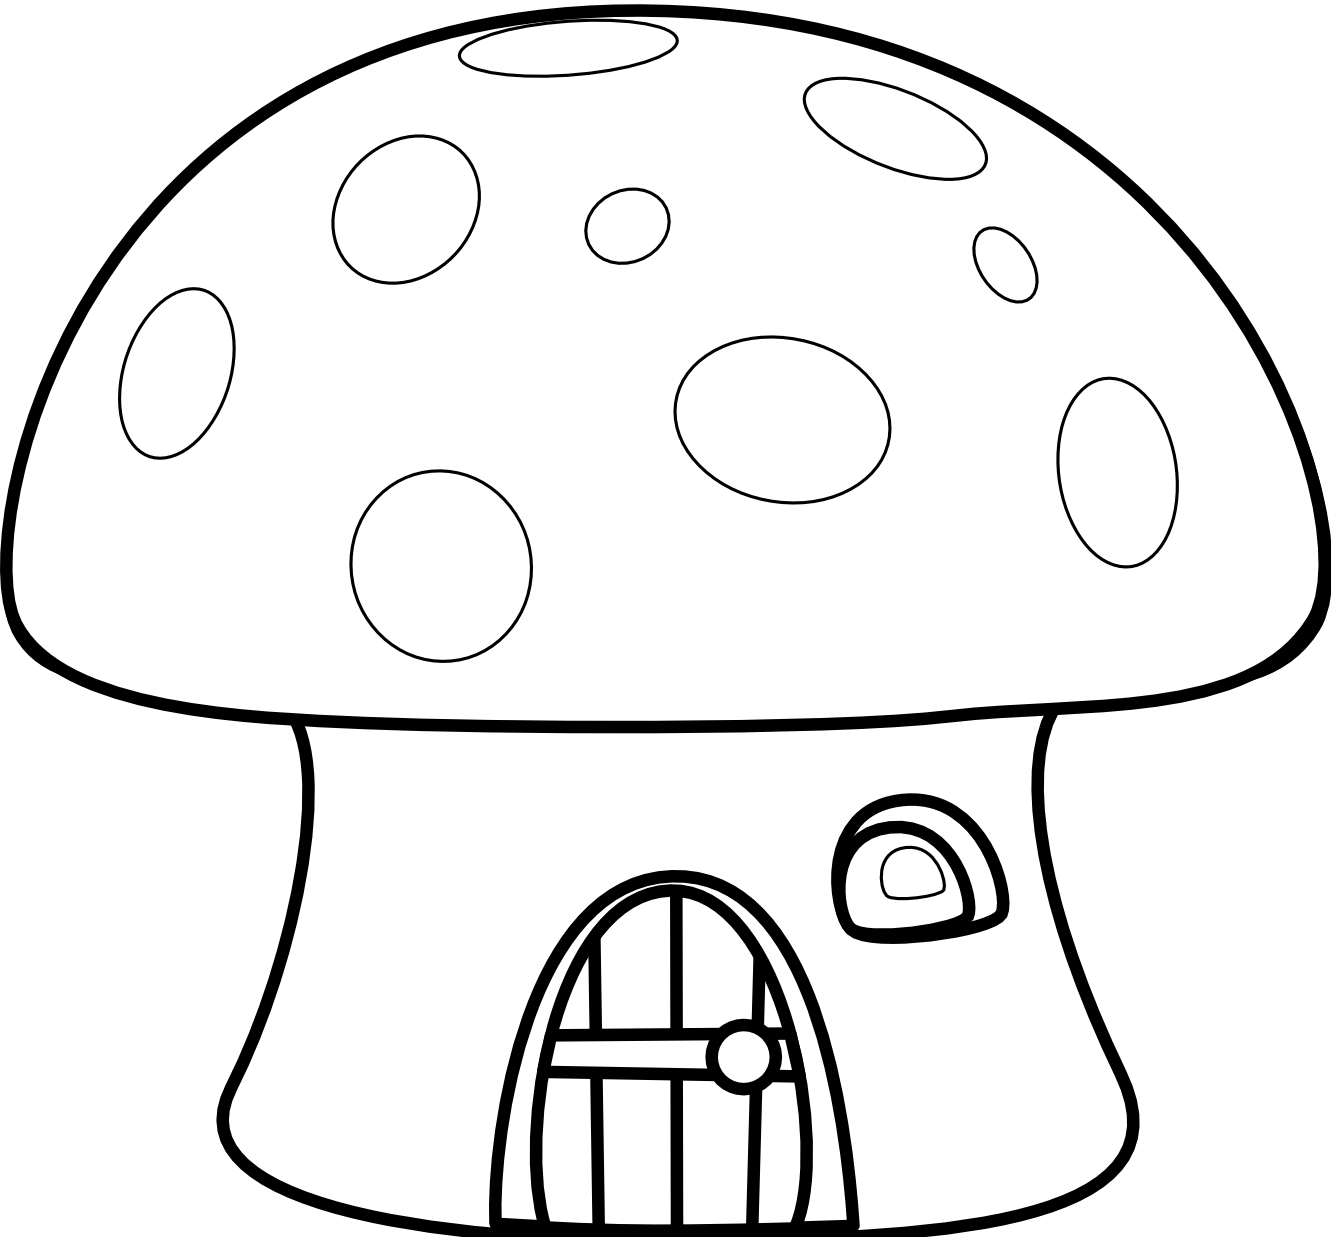 mushroom clipart black and white - photo #16